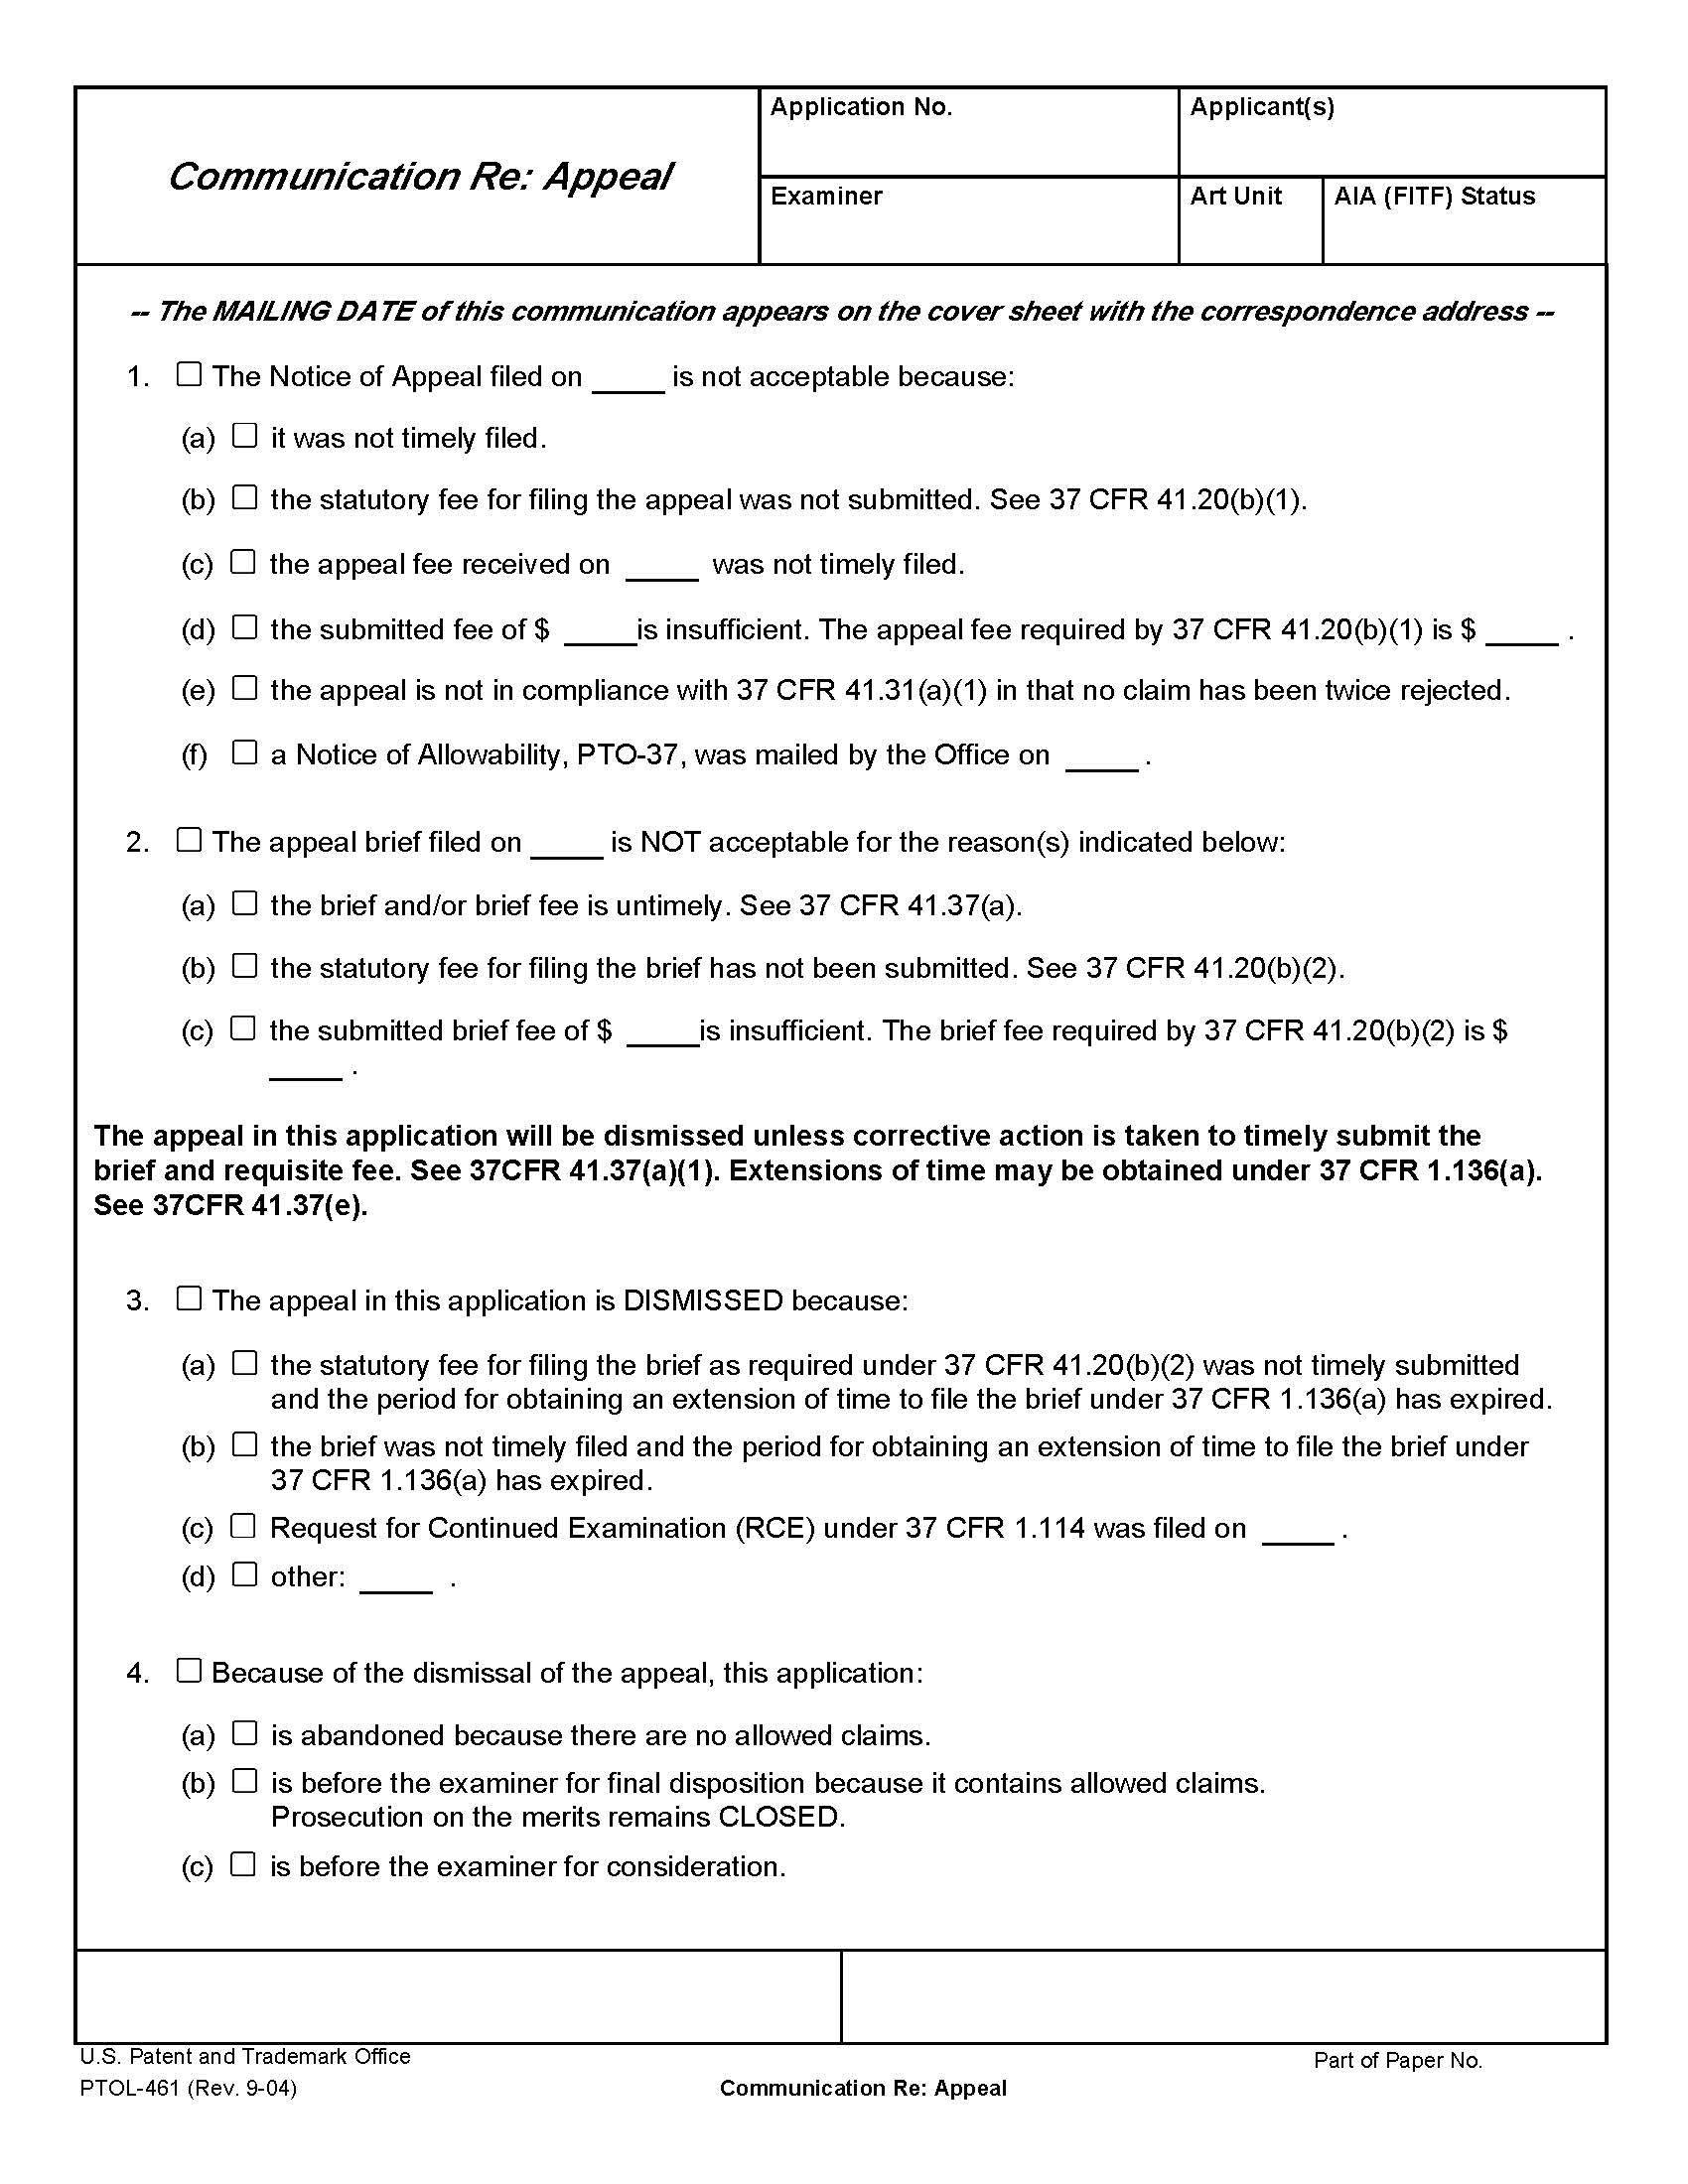 Communication Re: Appeal Form PTOL-461